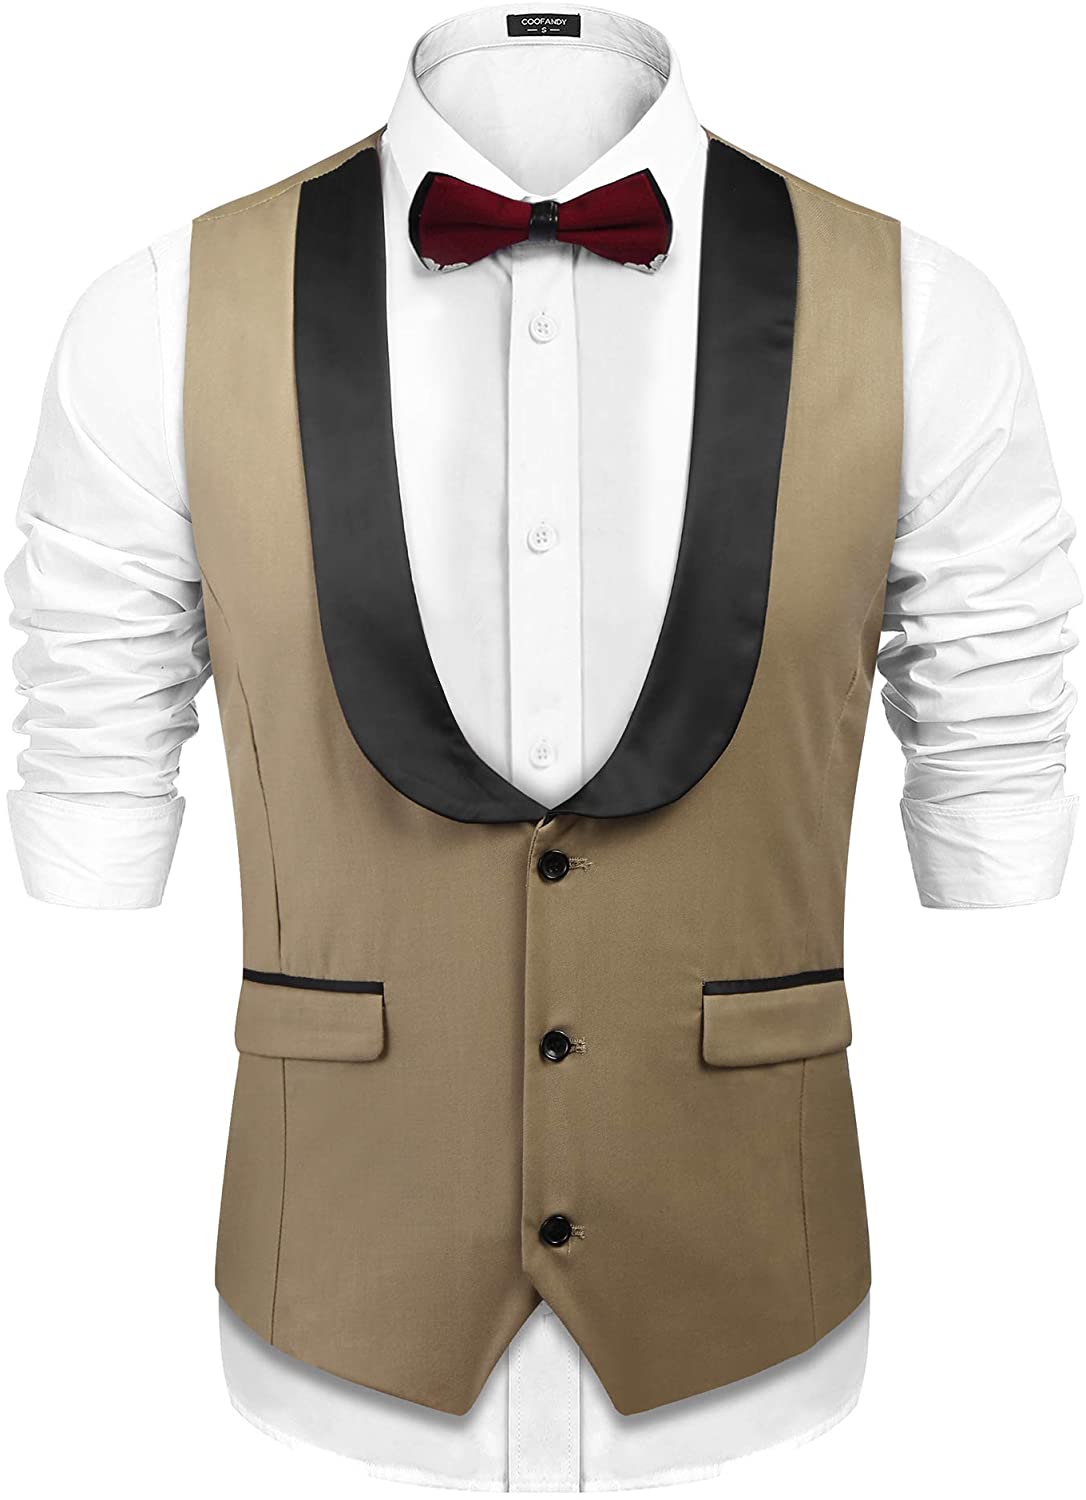 COOFANDY Men's Business Suit Vest Casual Layered Slim Fit Wedding Vests ...